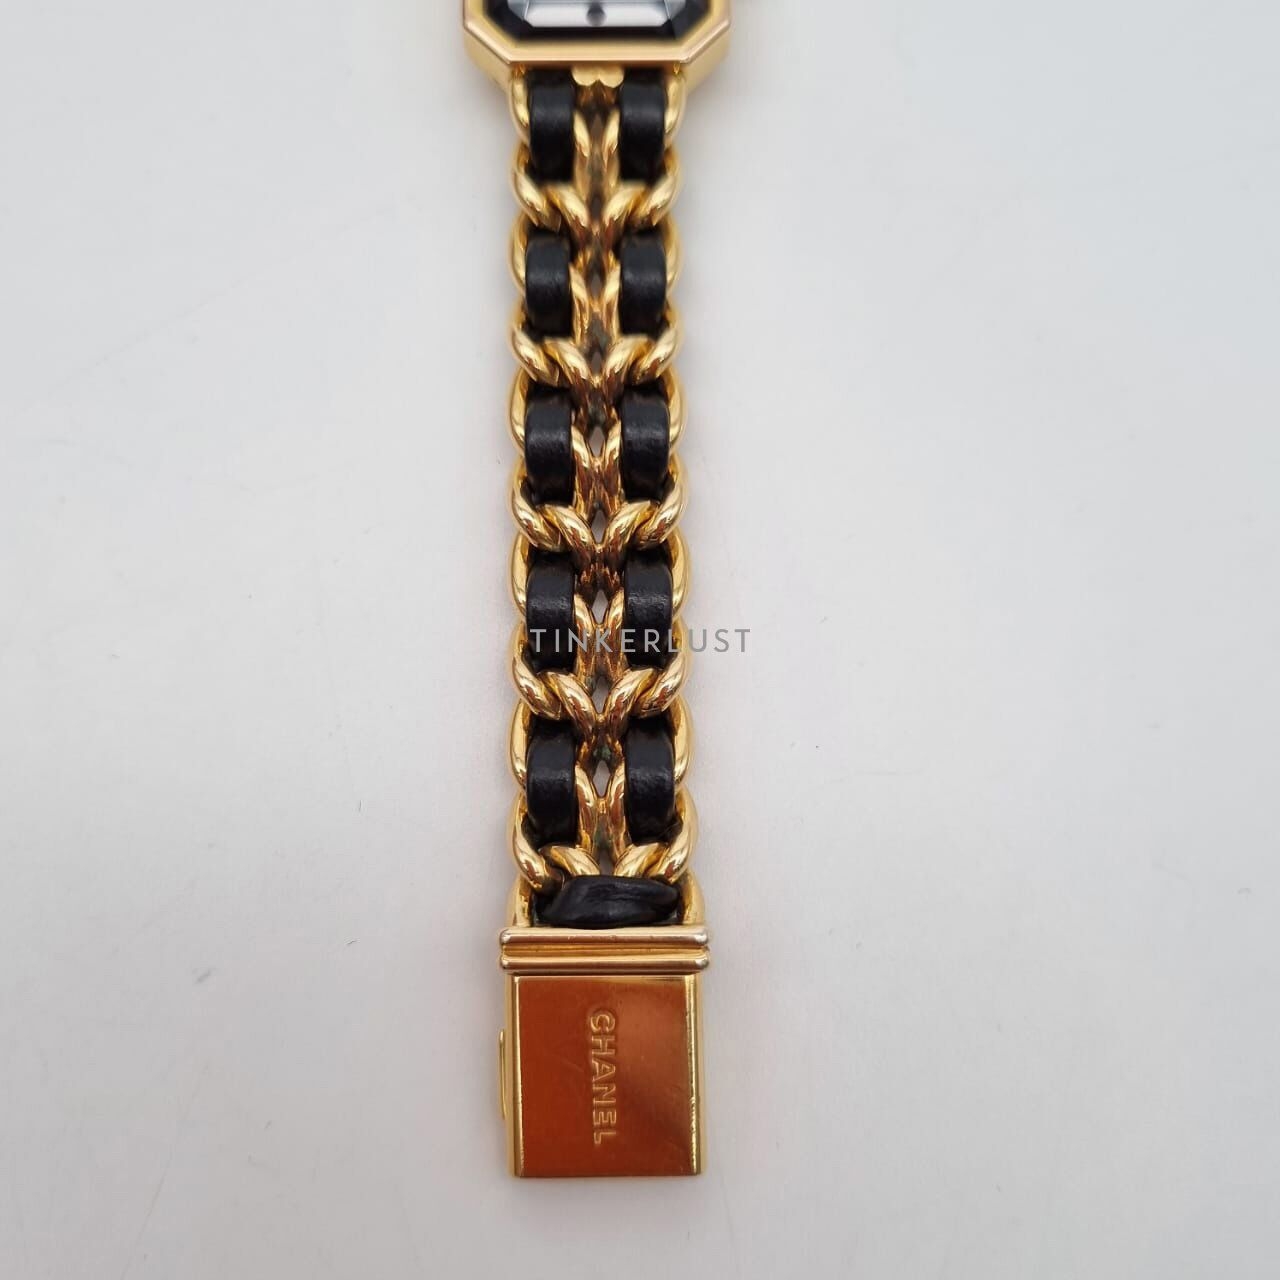 Chanel Vintage Premier Black GHW Watch